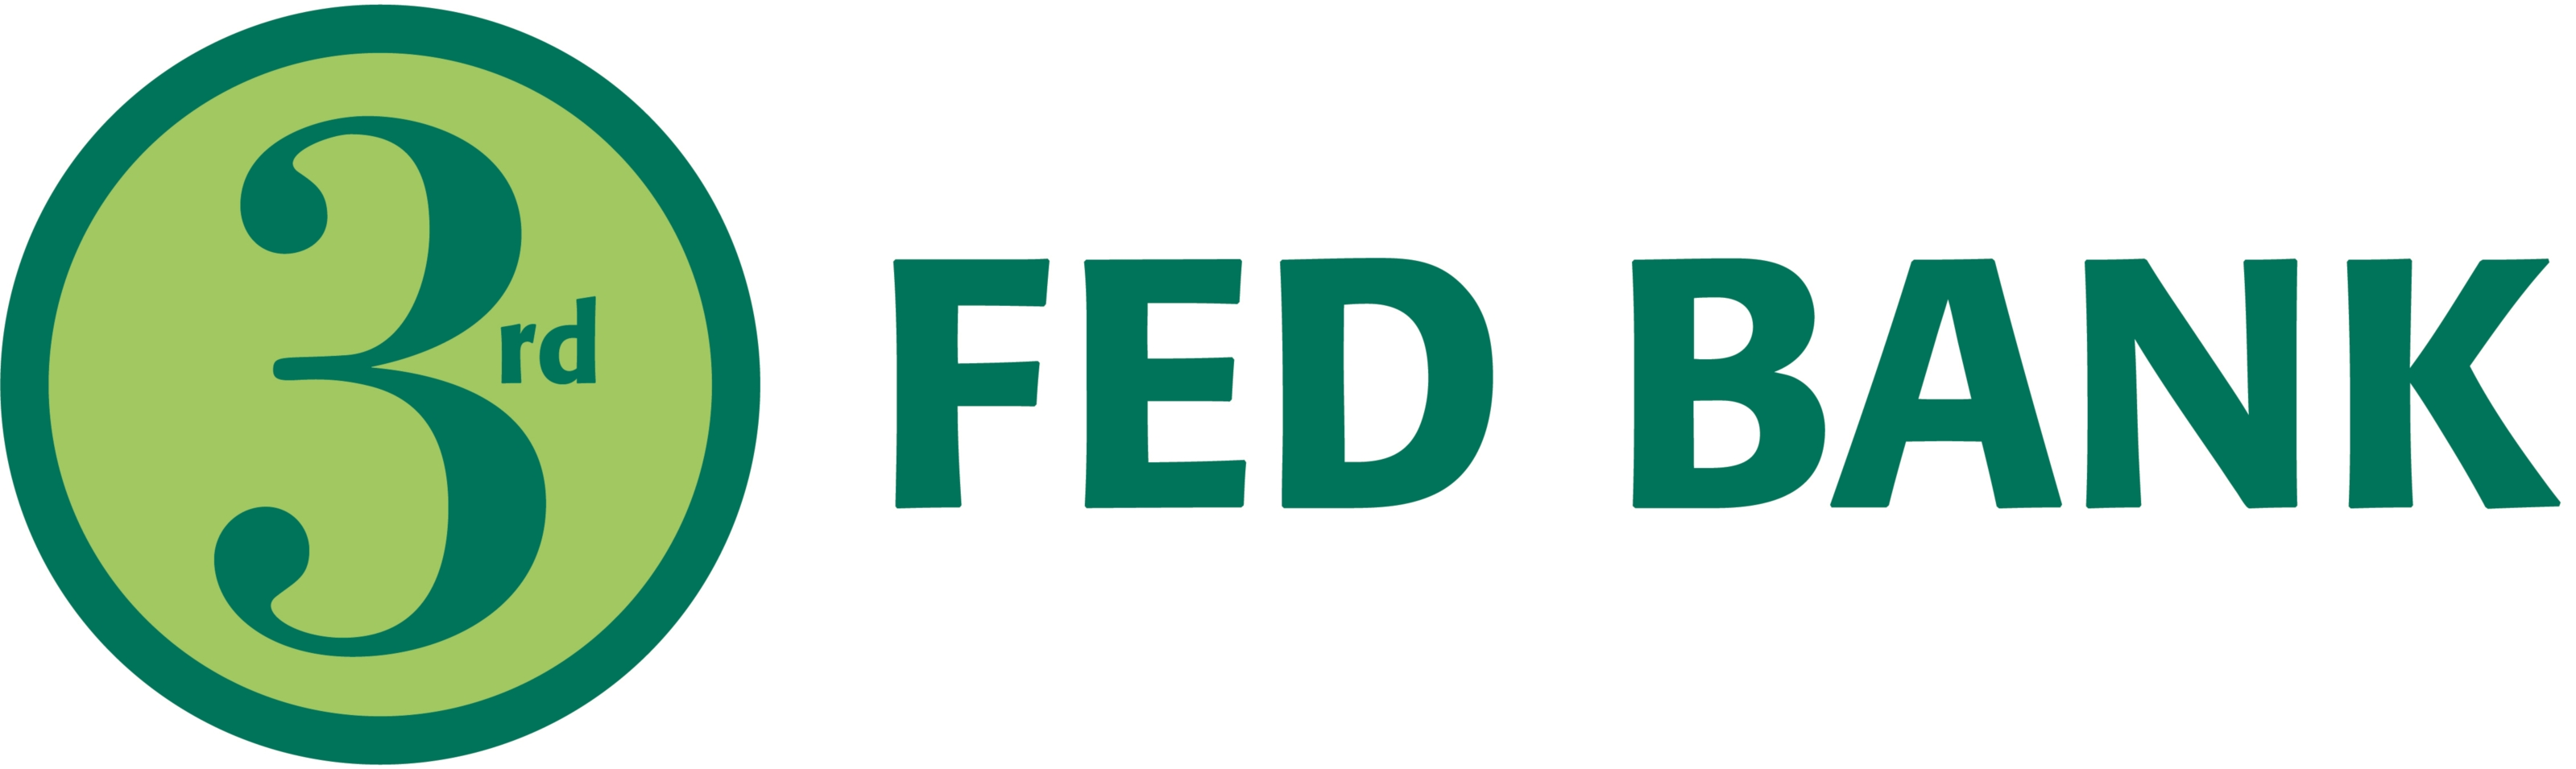 3rd Fed Bank Company Logo